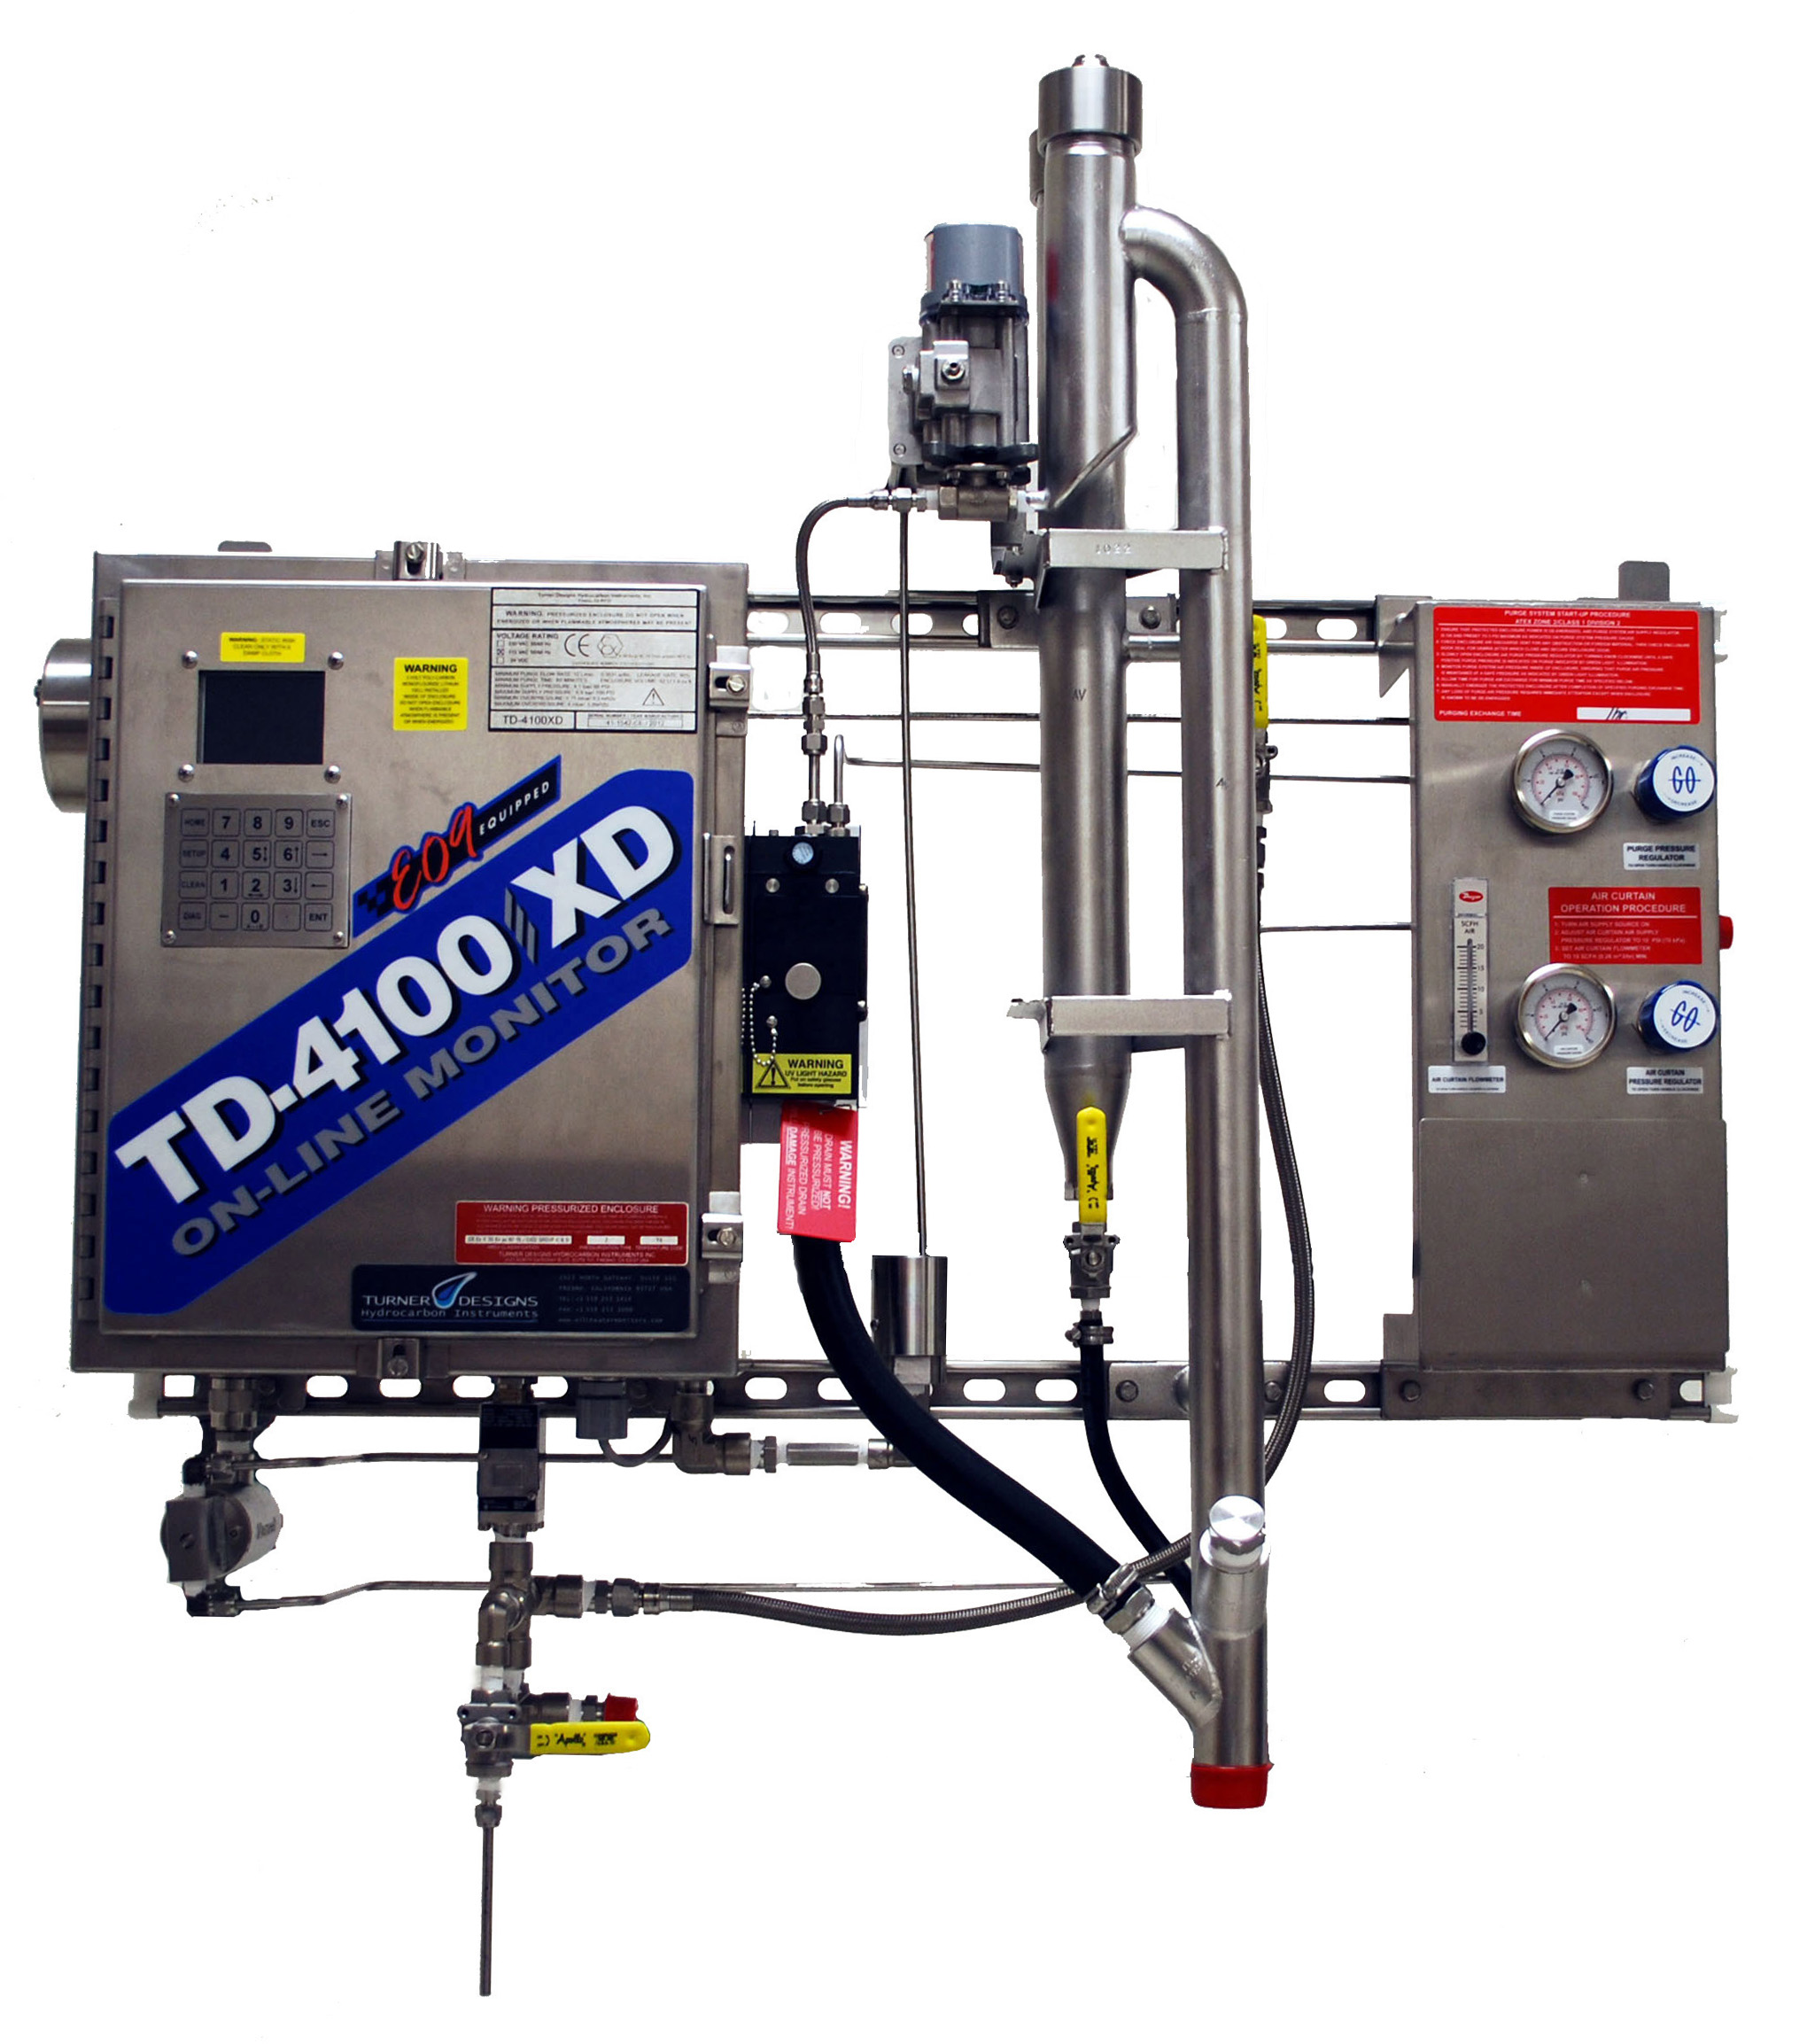 TD-4100XD Oil in Water Monitor